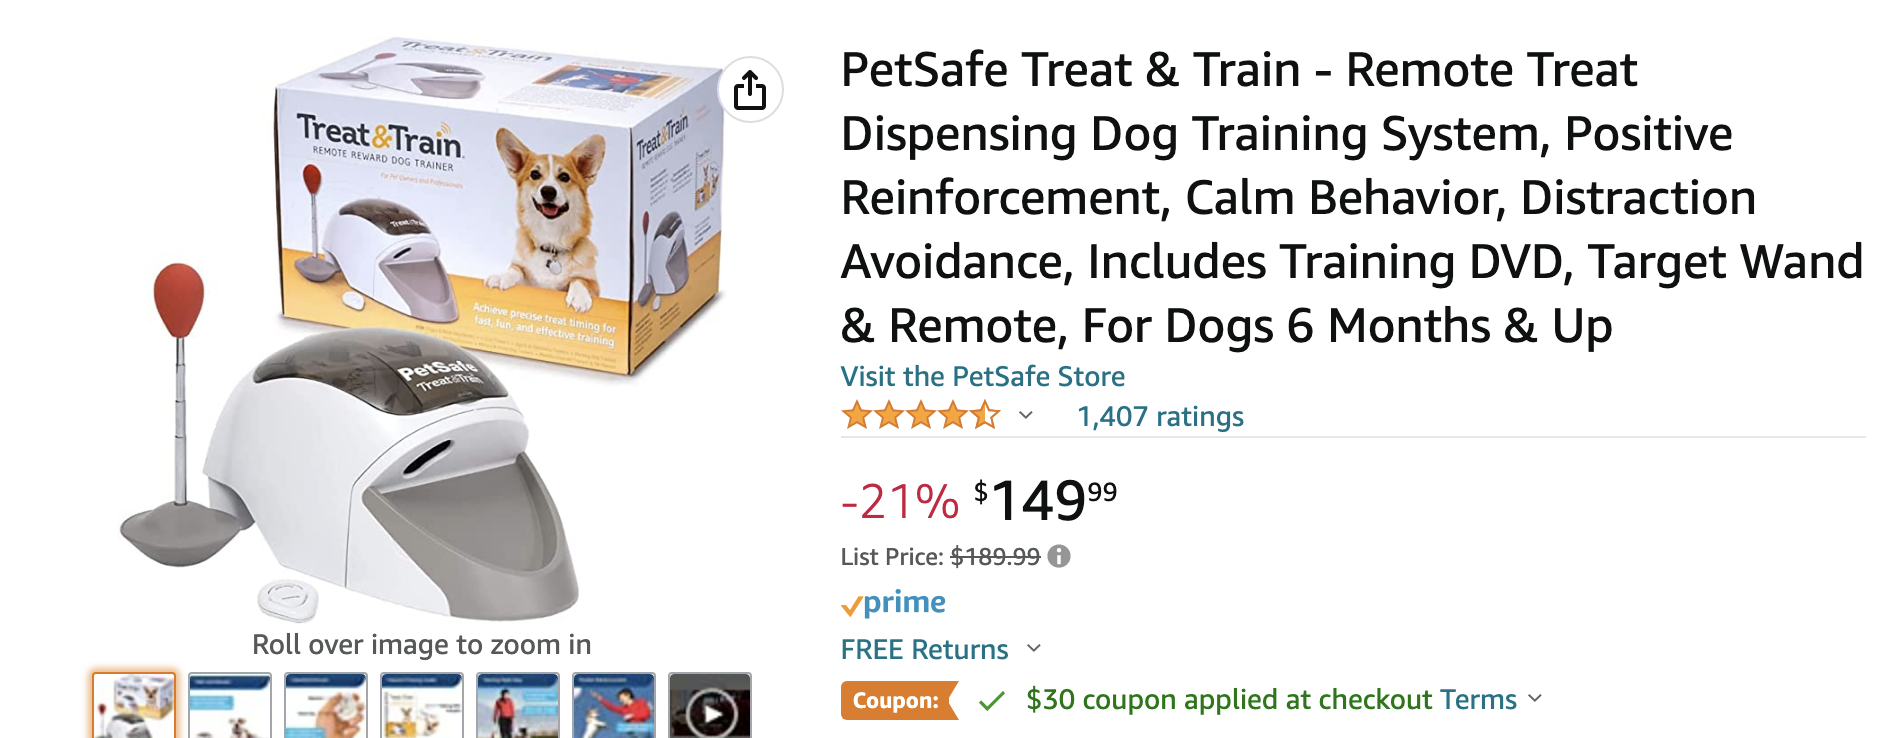 PetSafe Treat & Train - Remote Treat Dispensing Dog Training System $30 Off Coupon $119 Final Price